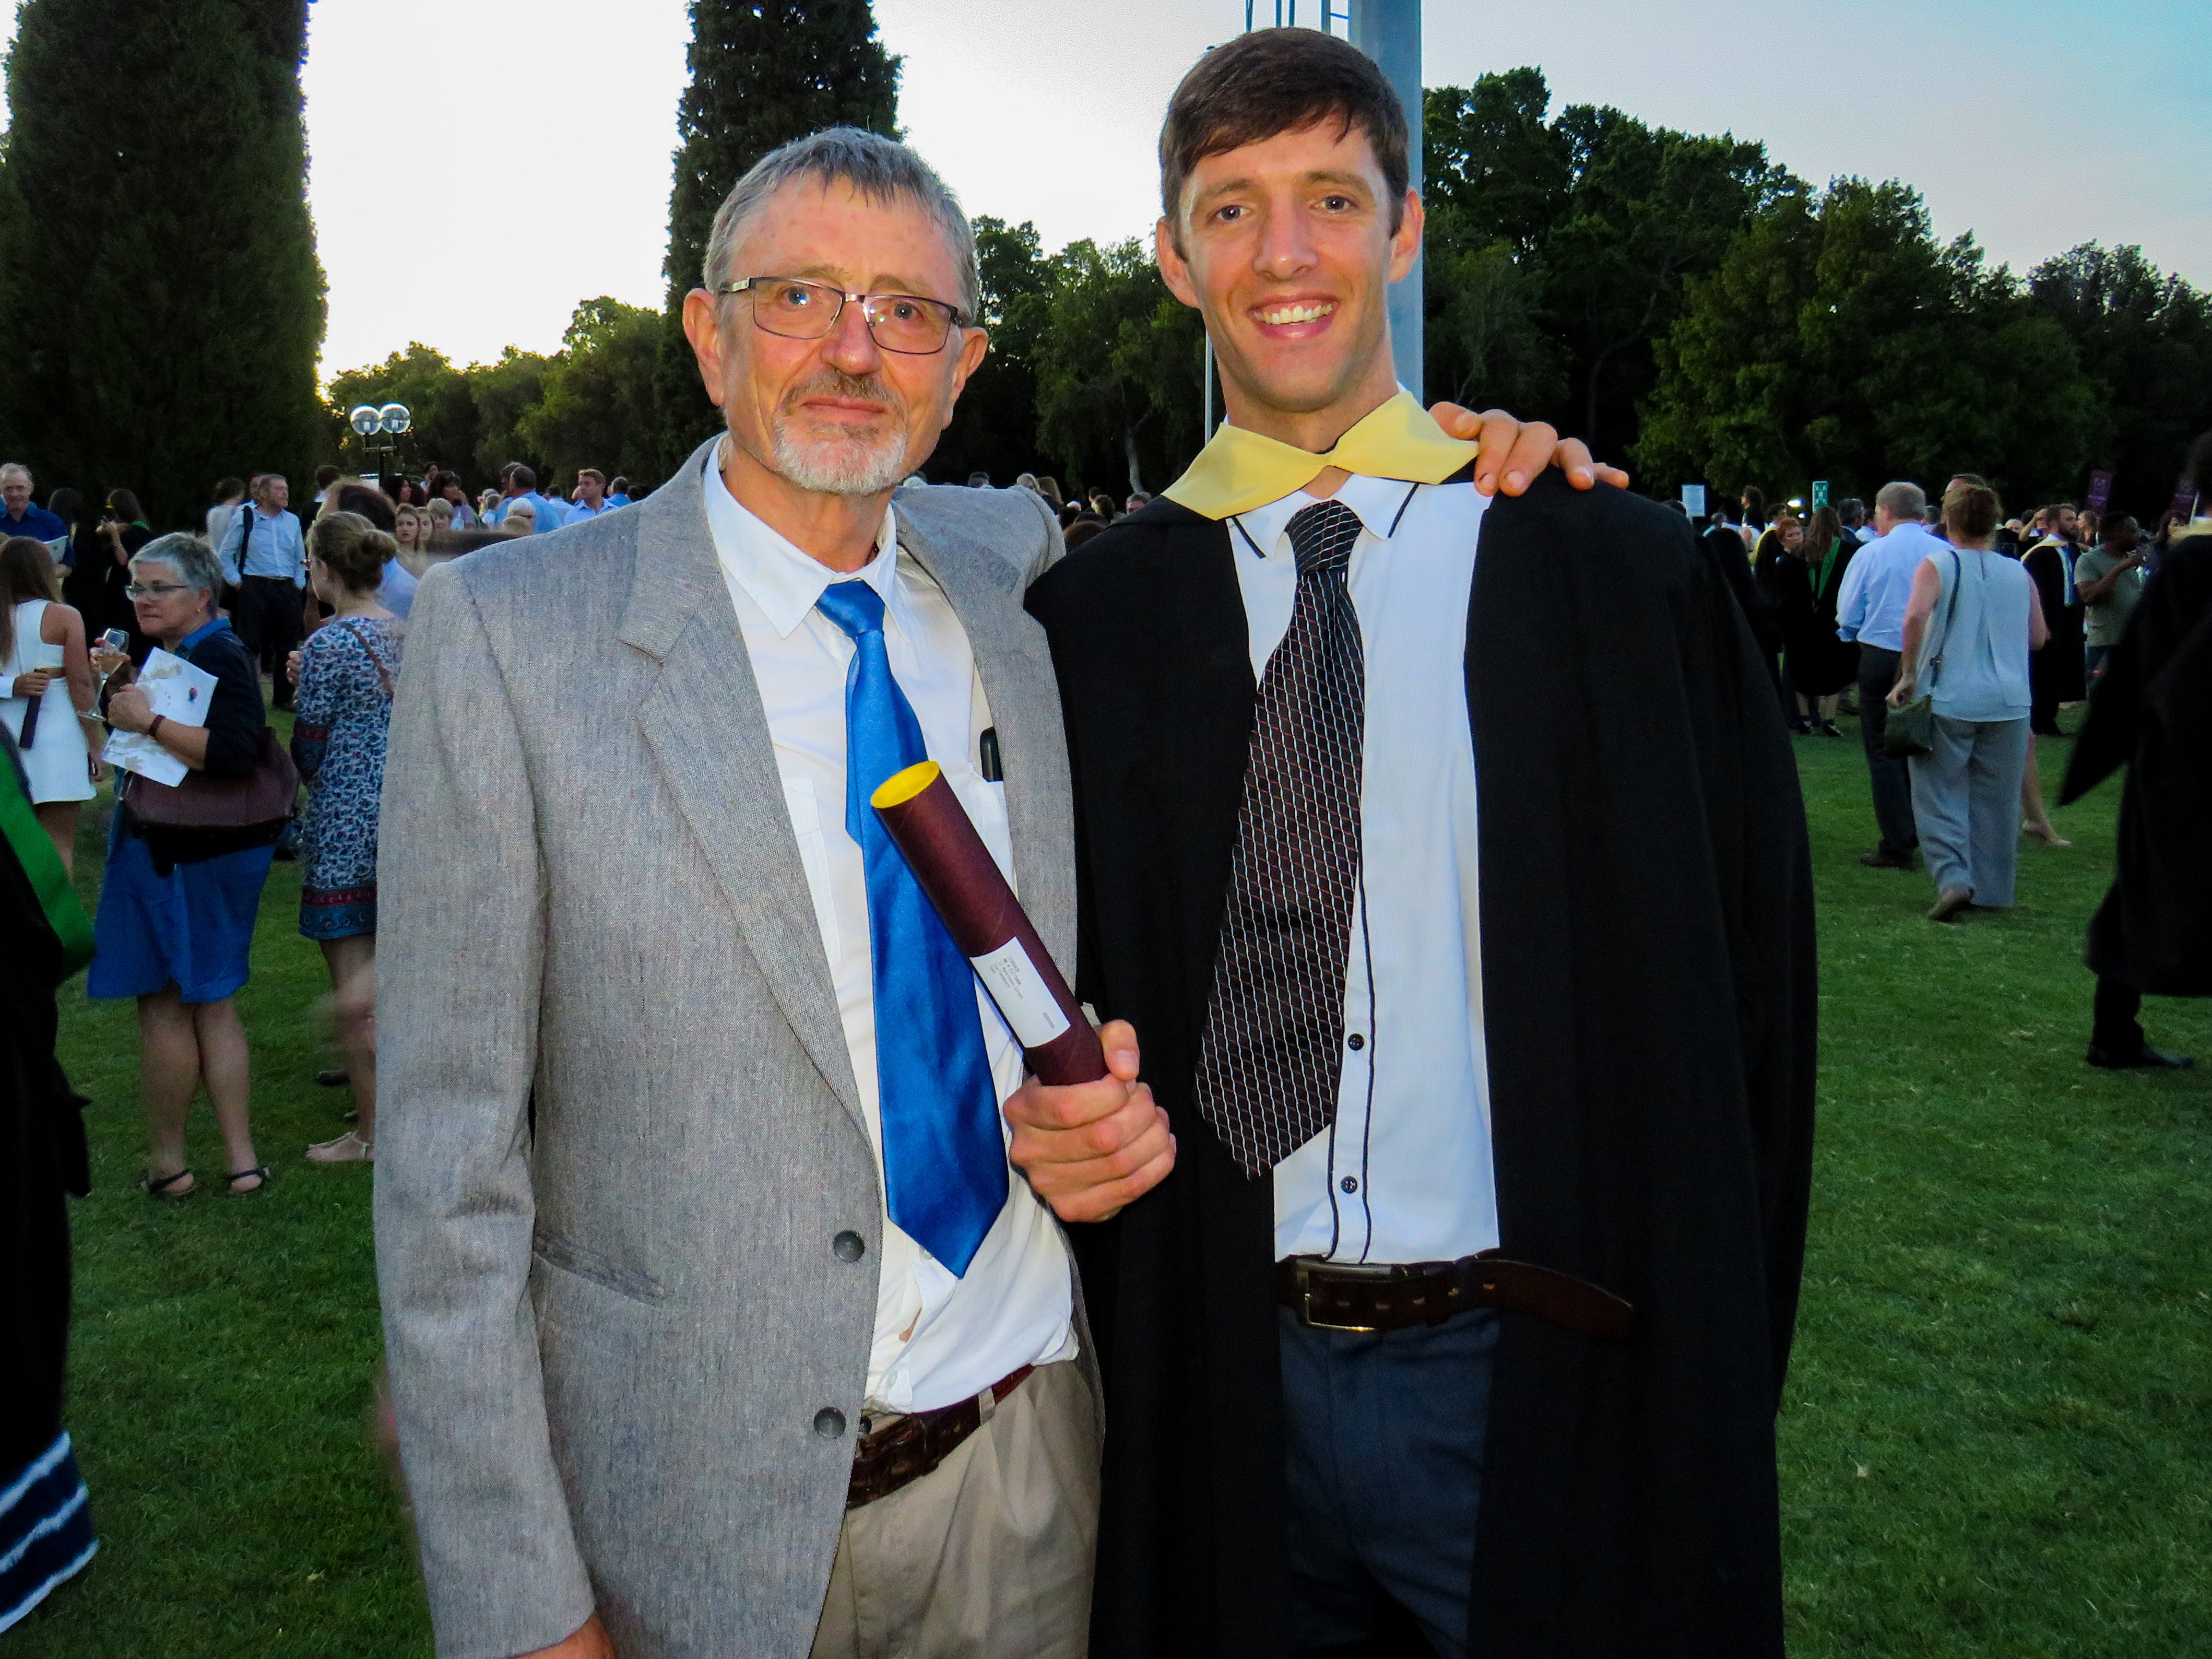 A proud dad and Martin at graduation